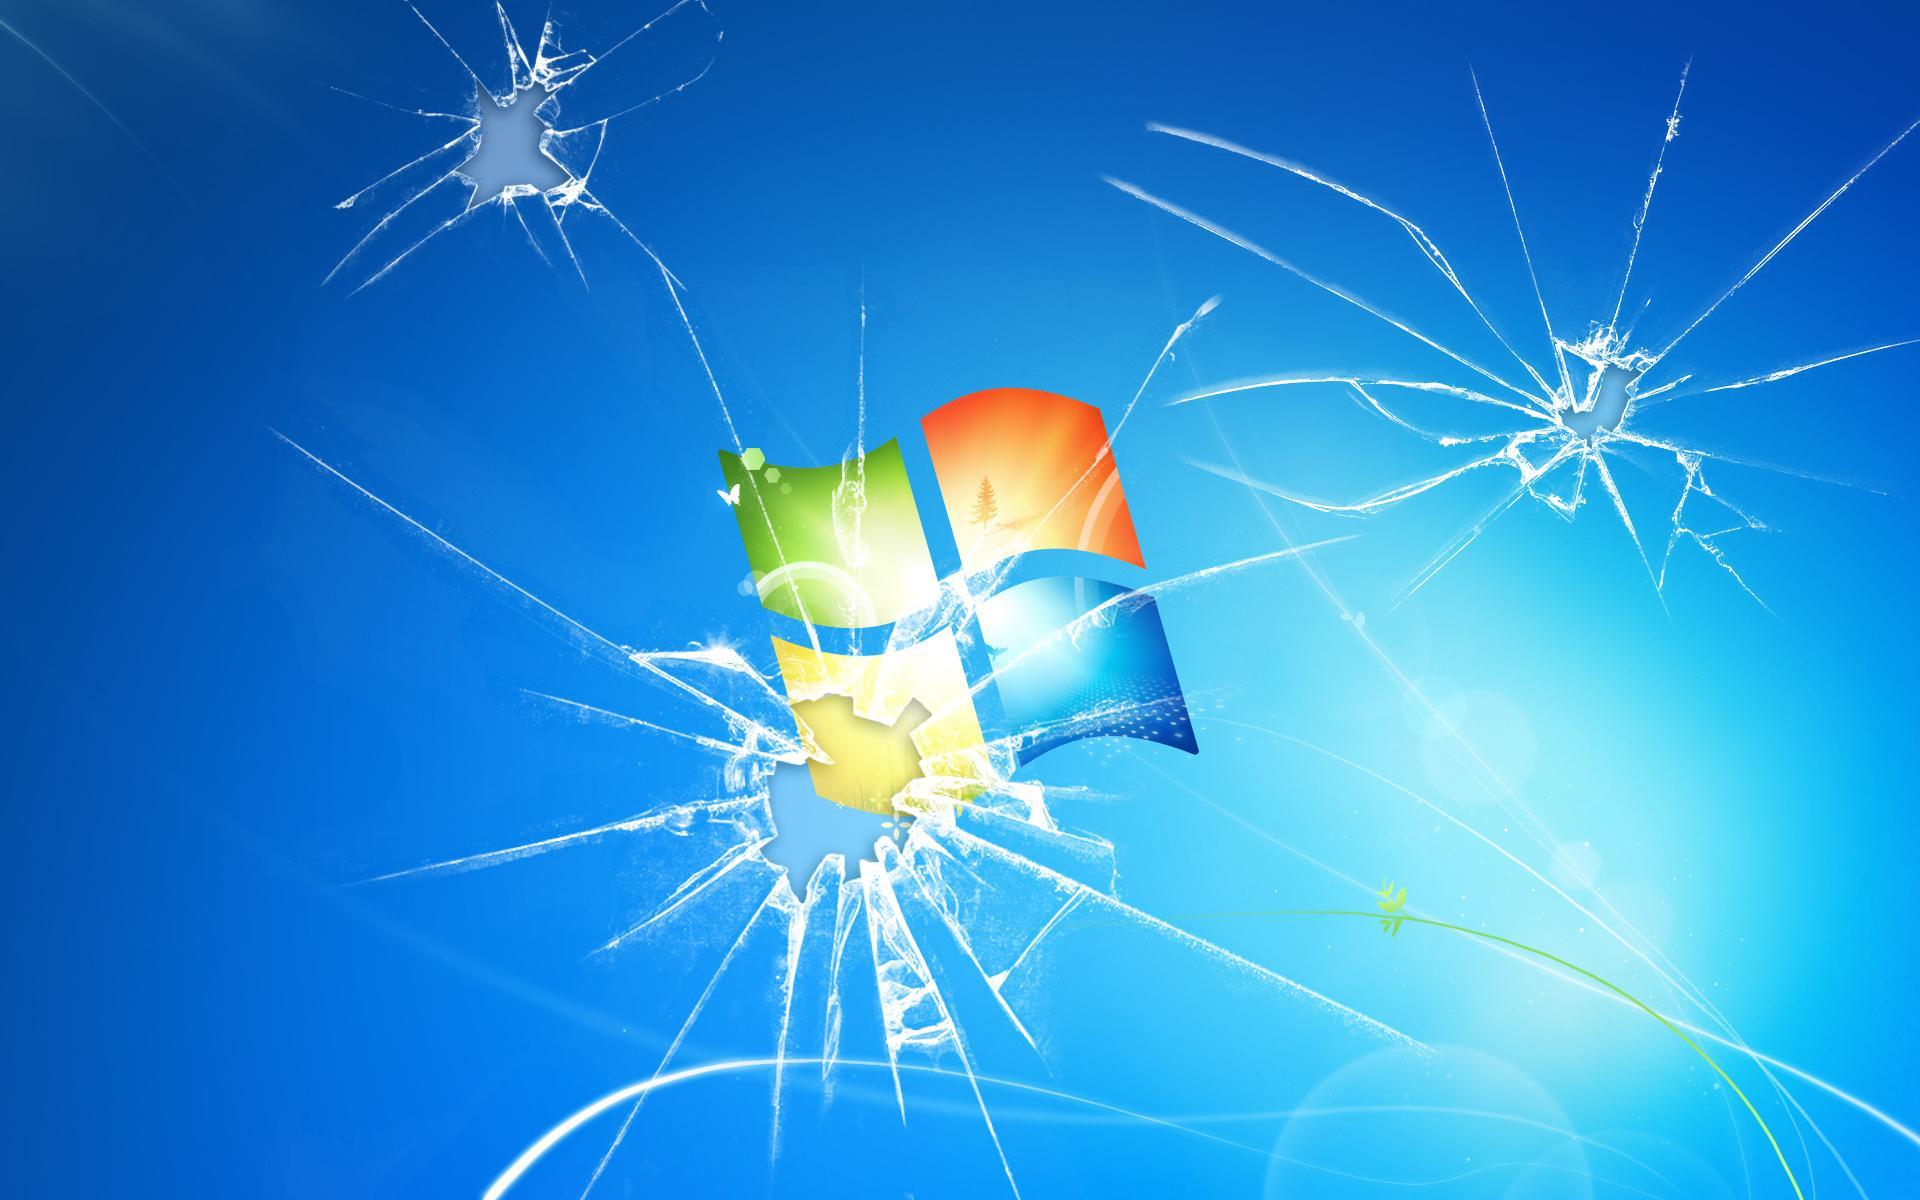 cracked screen background windows 8